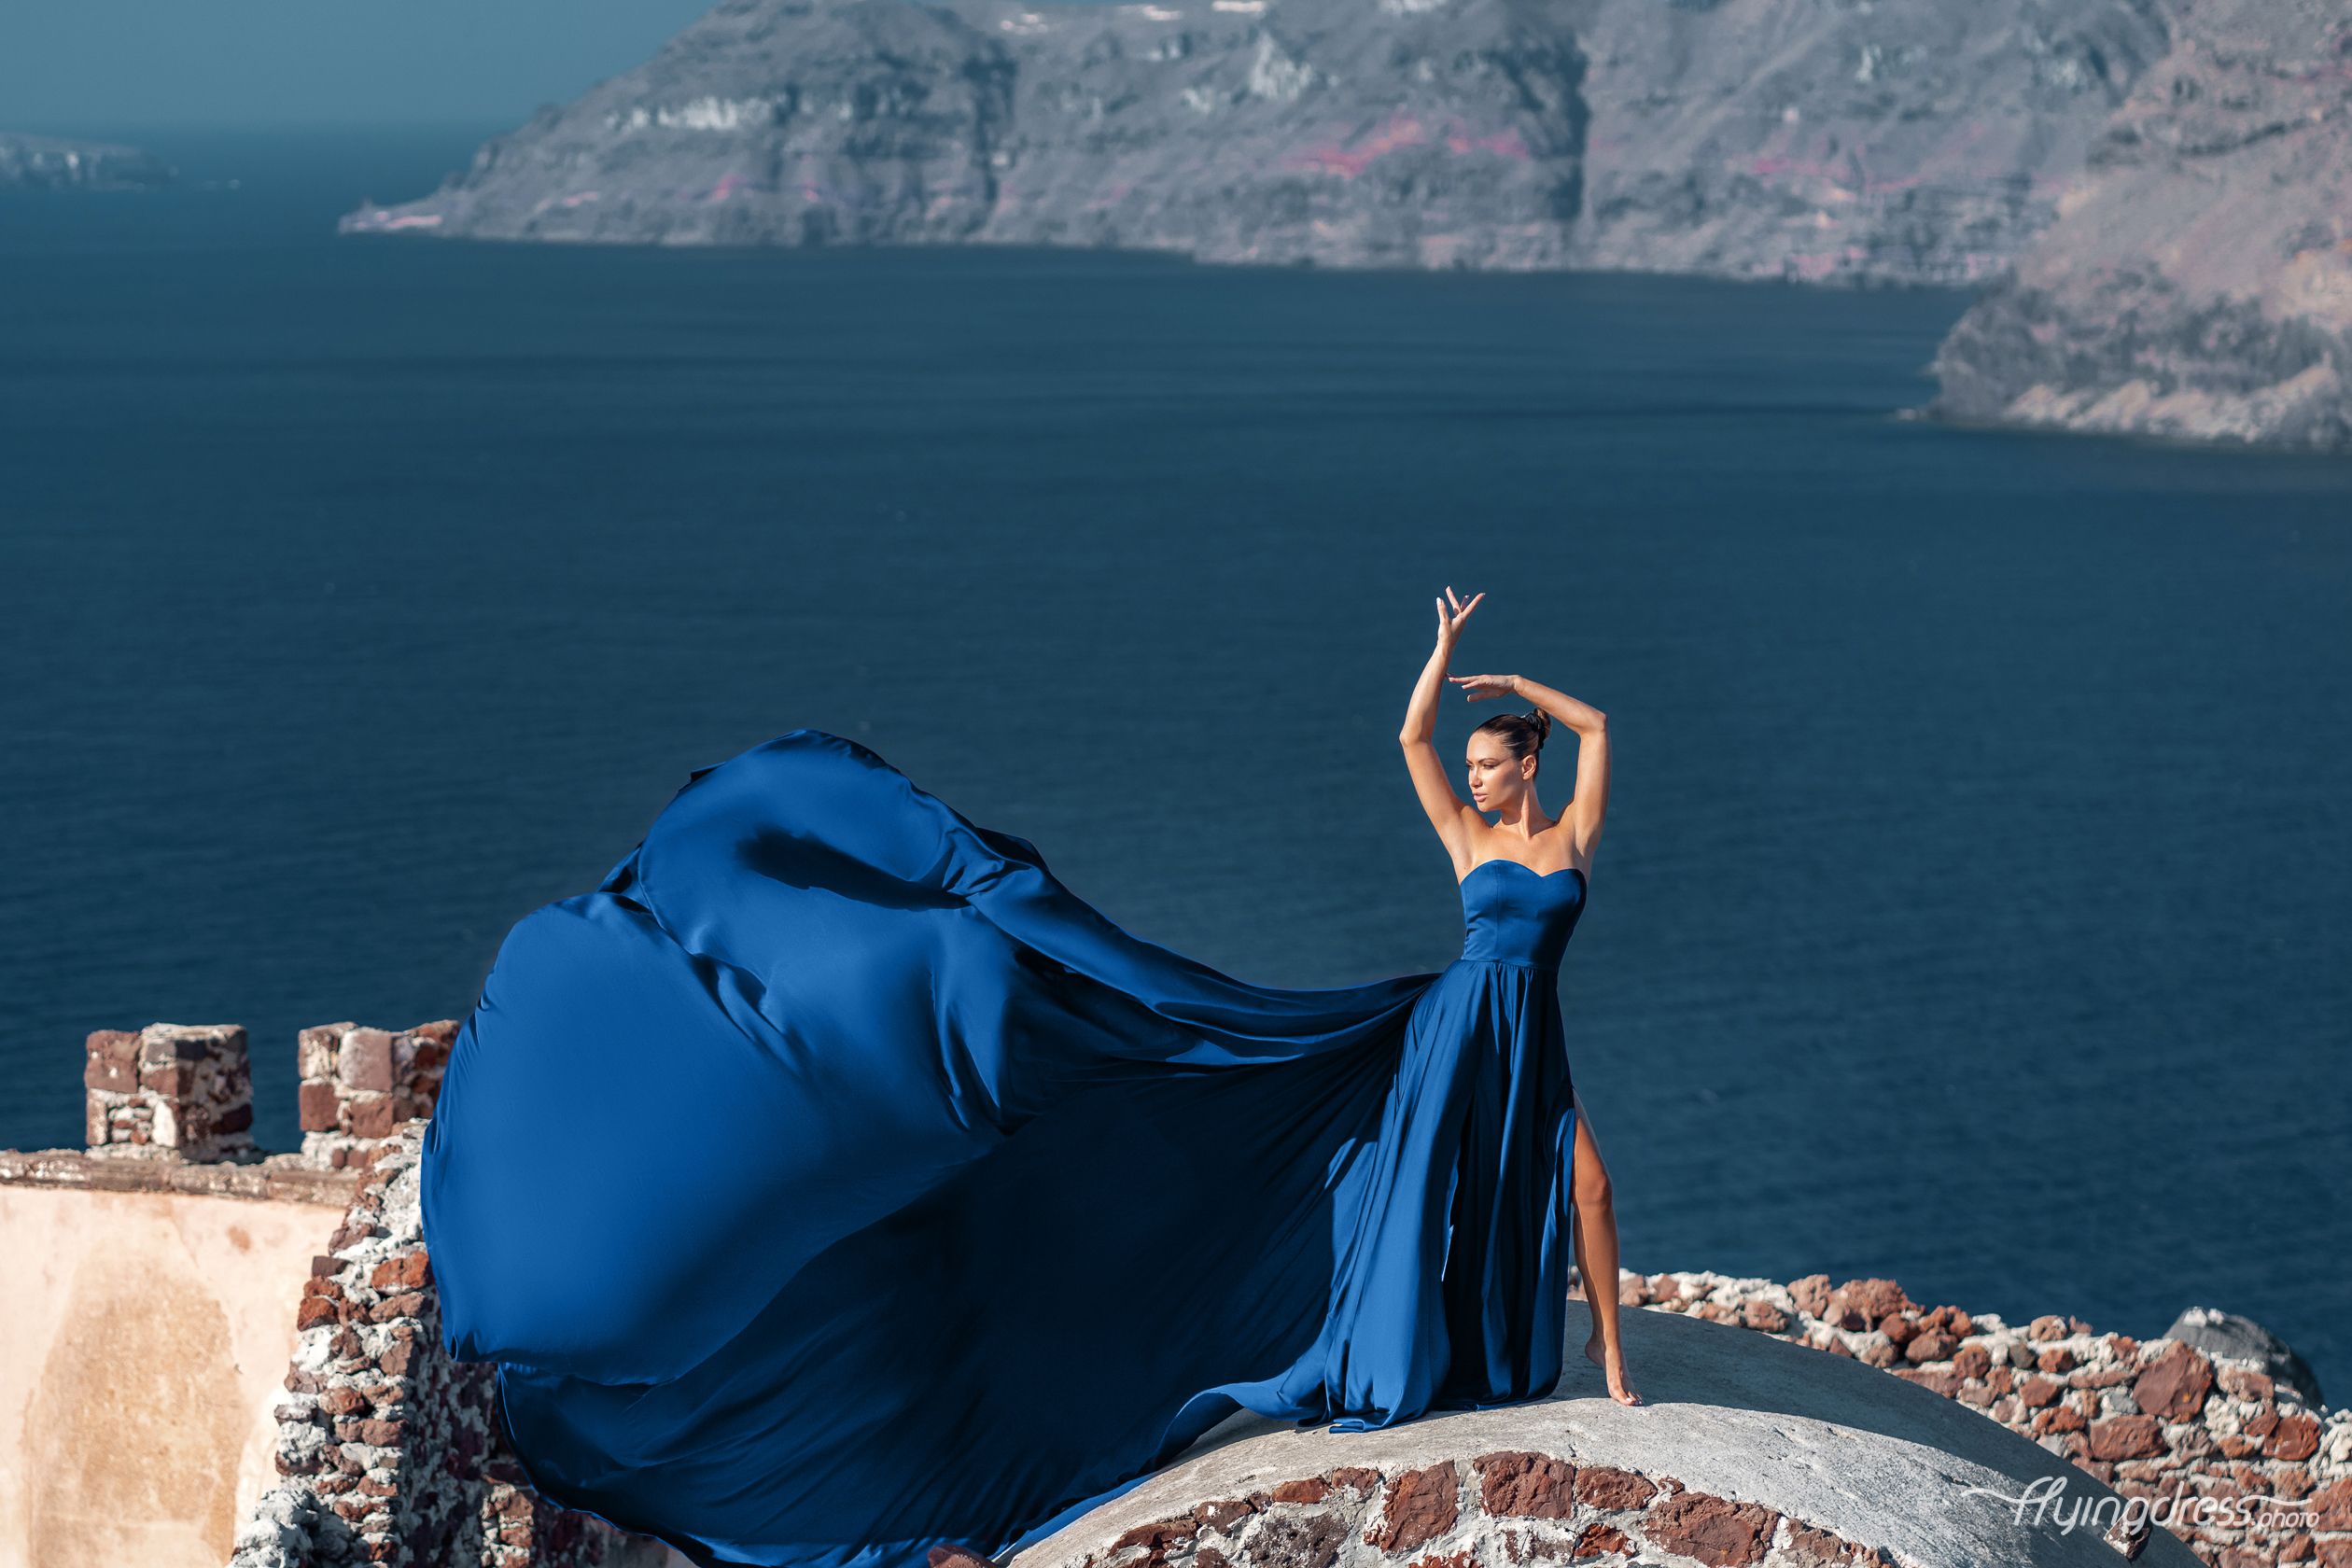 Flying dress photoshoot in Oia village, Santorini